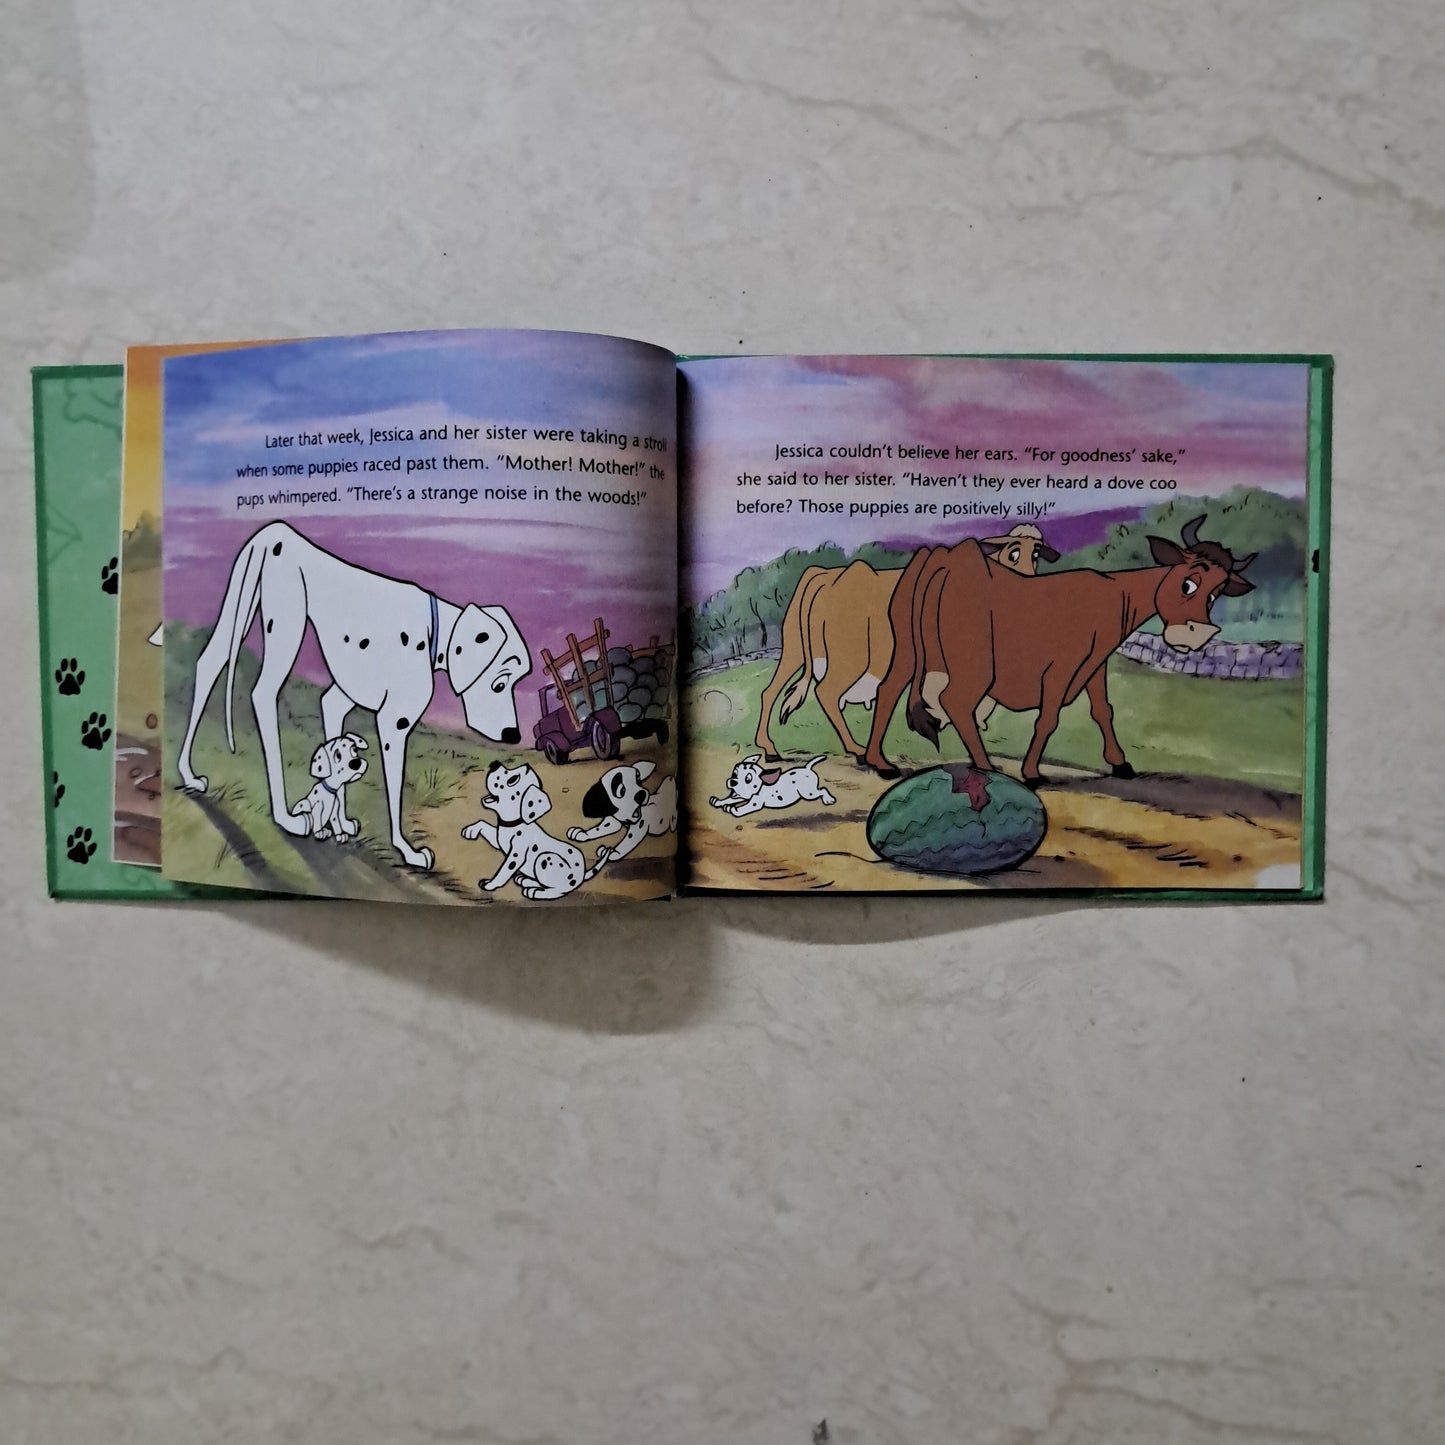 Disney 101 Dalmatians Look Both Ways | Hardcover